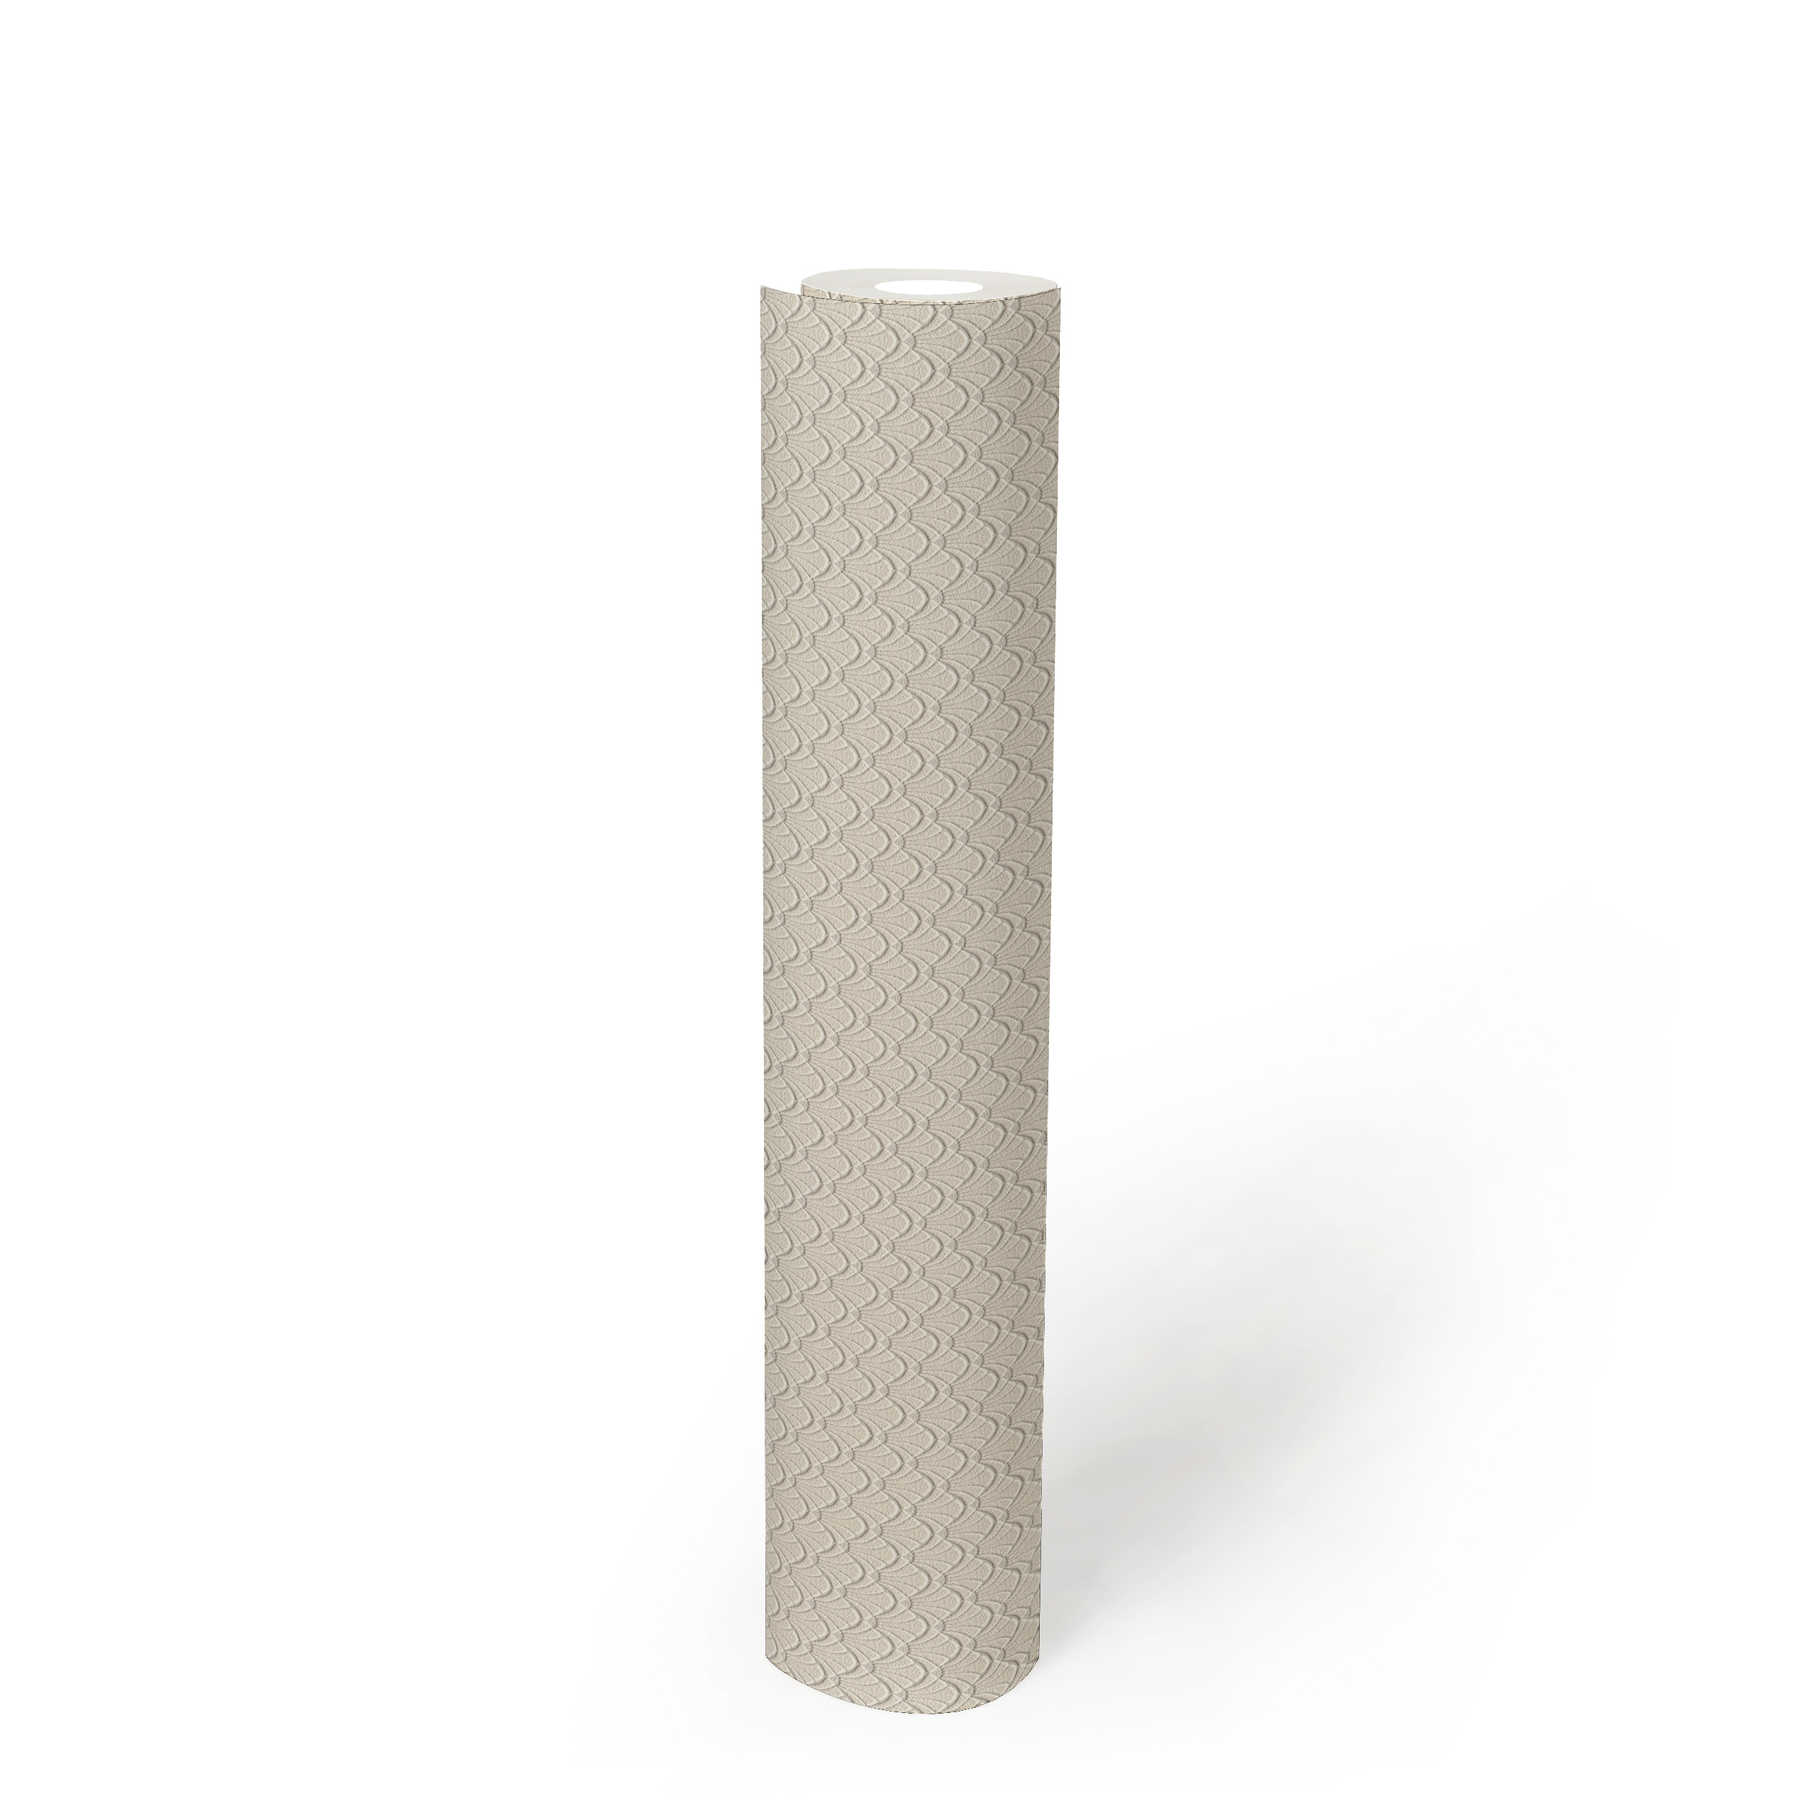             Tapete filigranes Strukturmuster im Muschel-Design – Beige, Grau
        